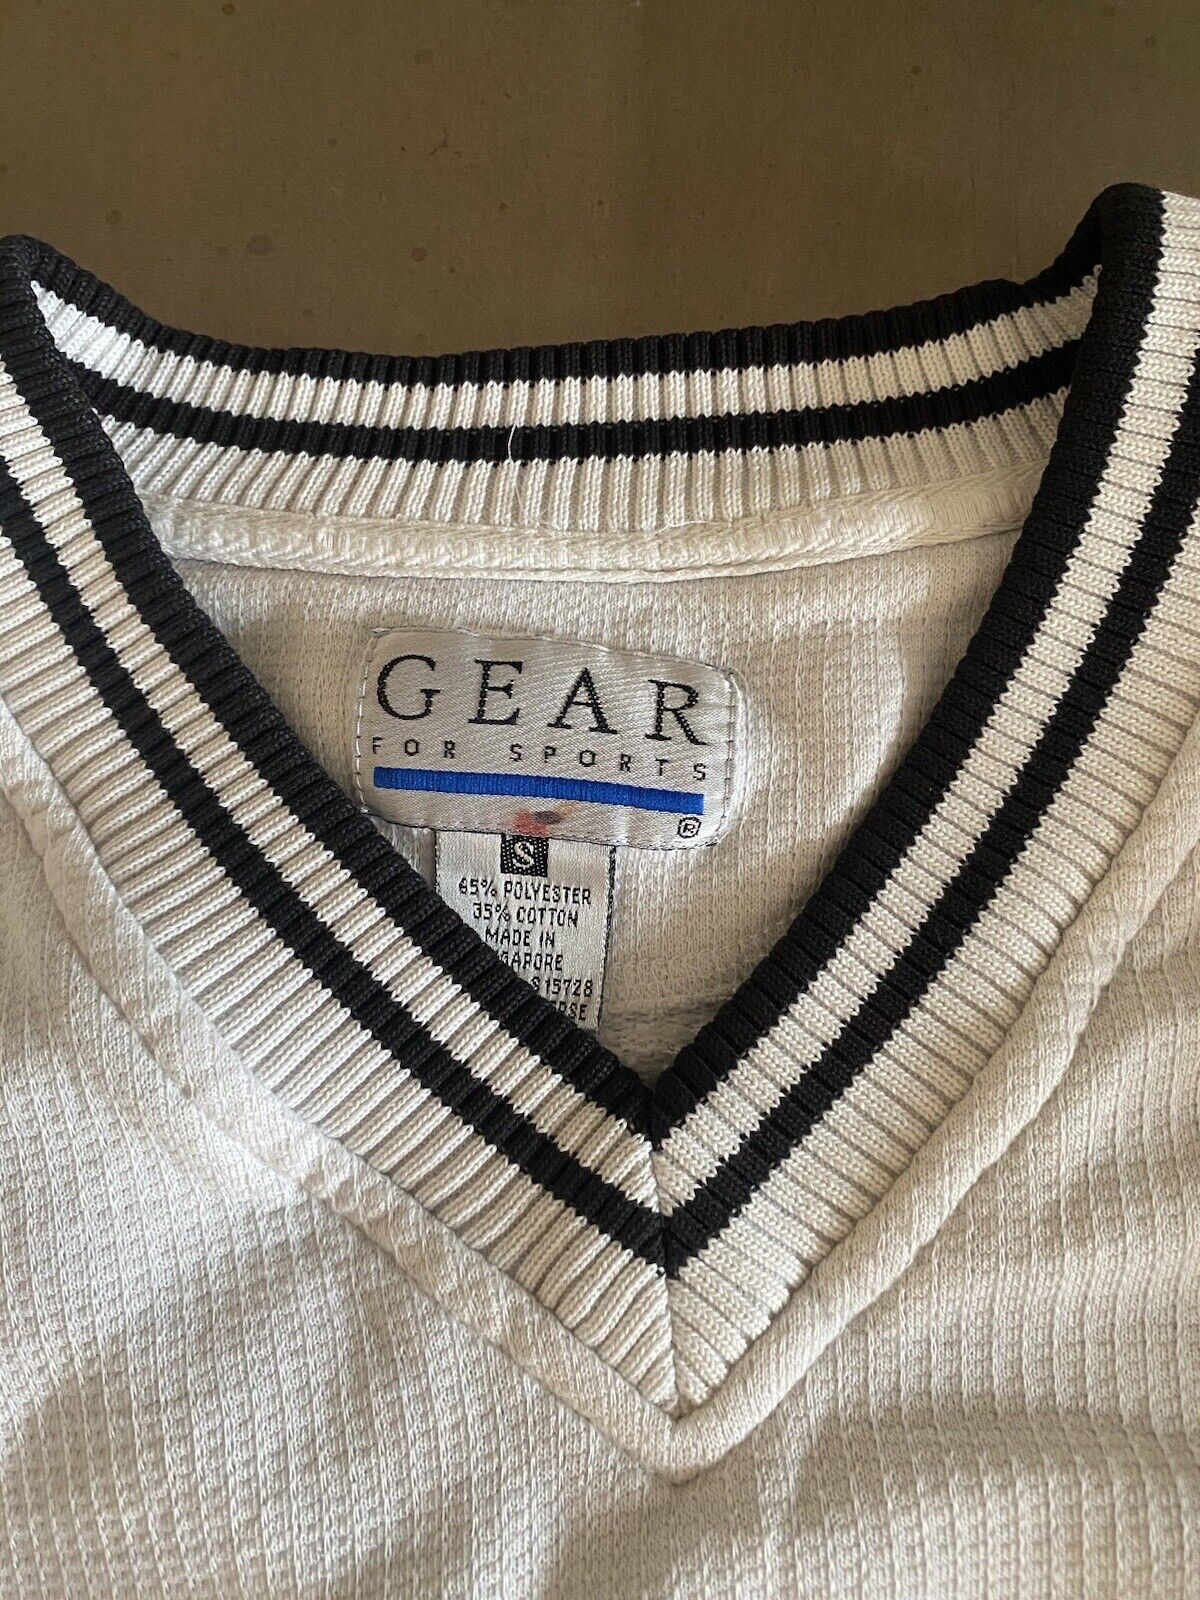 Gear for Sports Vintage V-Neck Cuffed Sweater Sz S Preppy Bailantrae Golf Tennis